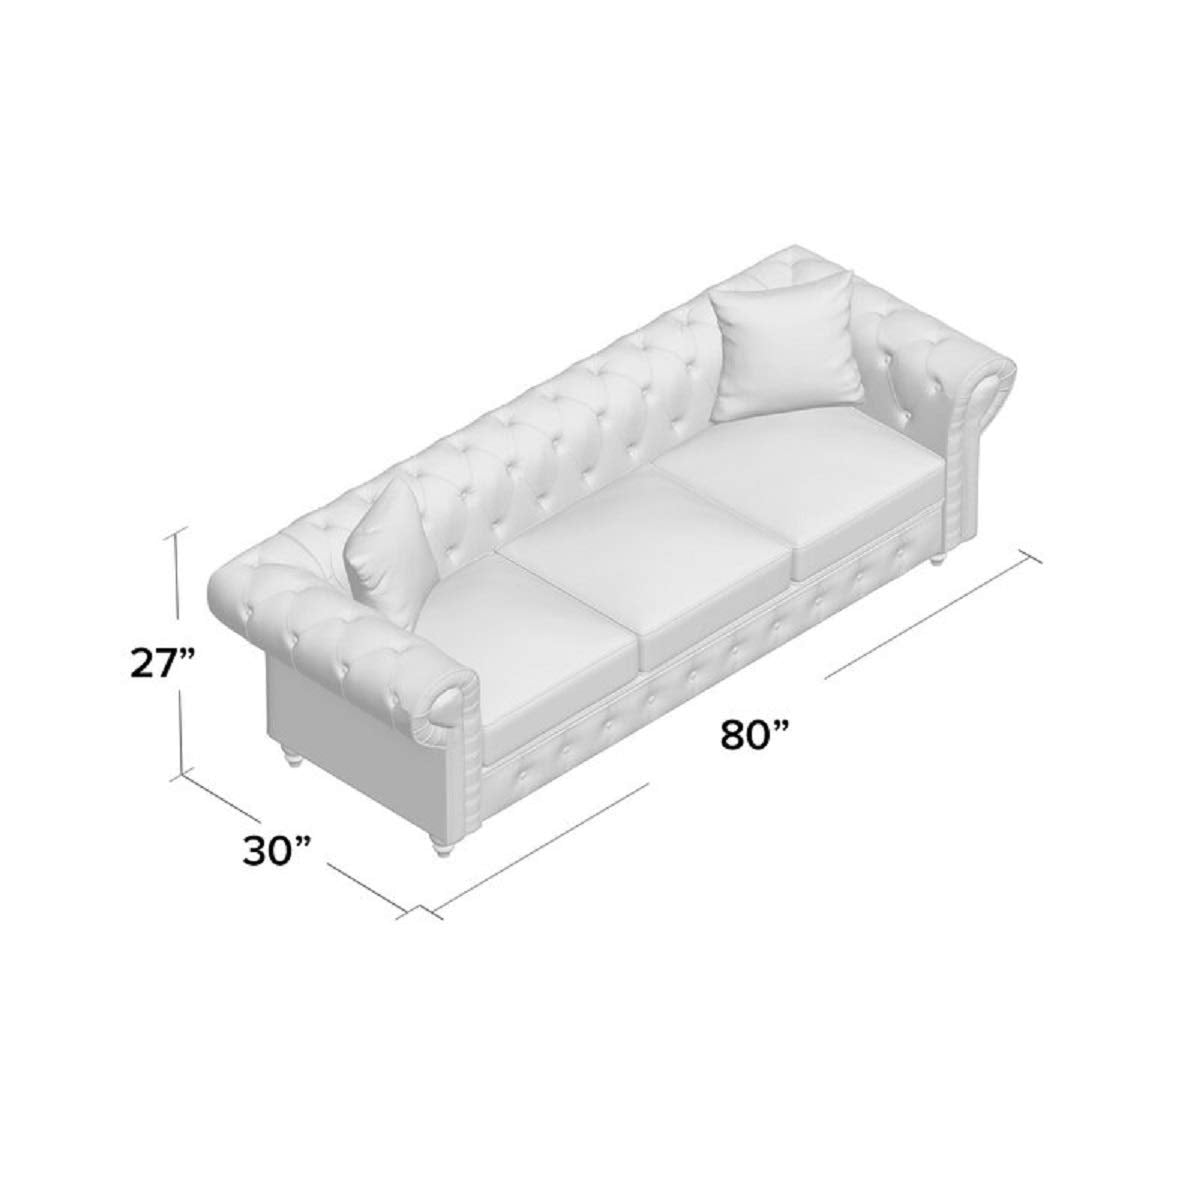 Designer Sofa Set:- Logue 3 Seater Velvet Fabric Sofa (Grey)